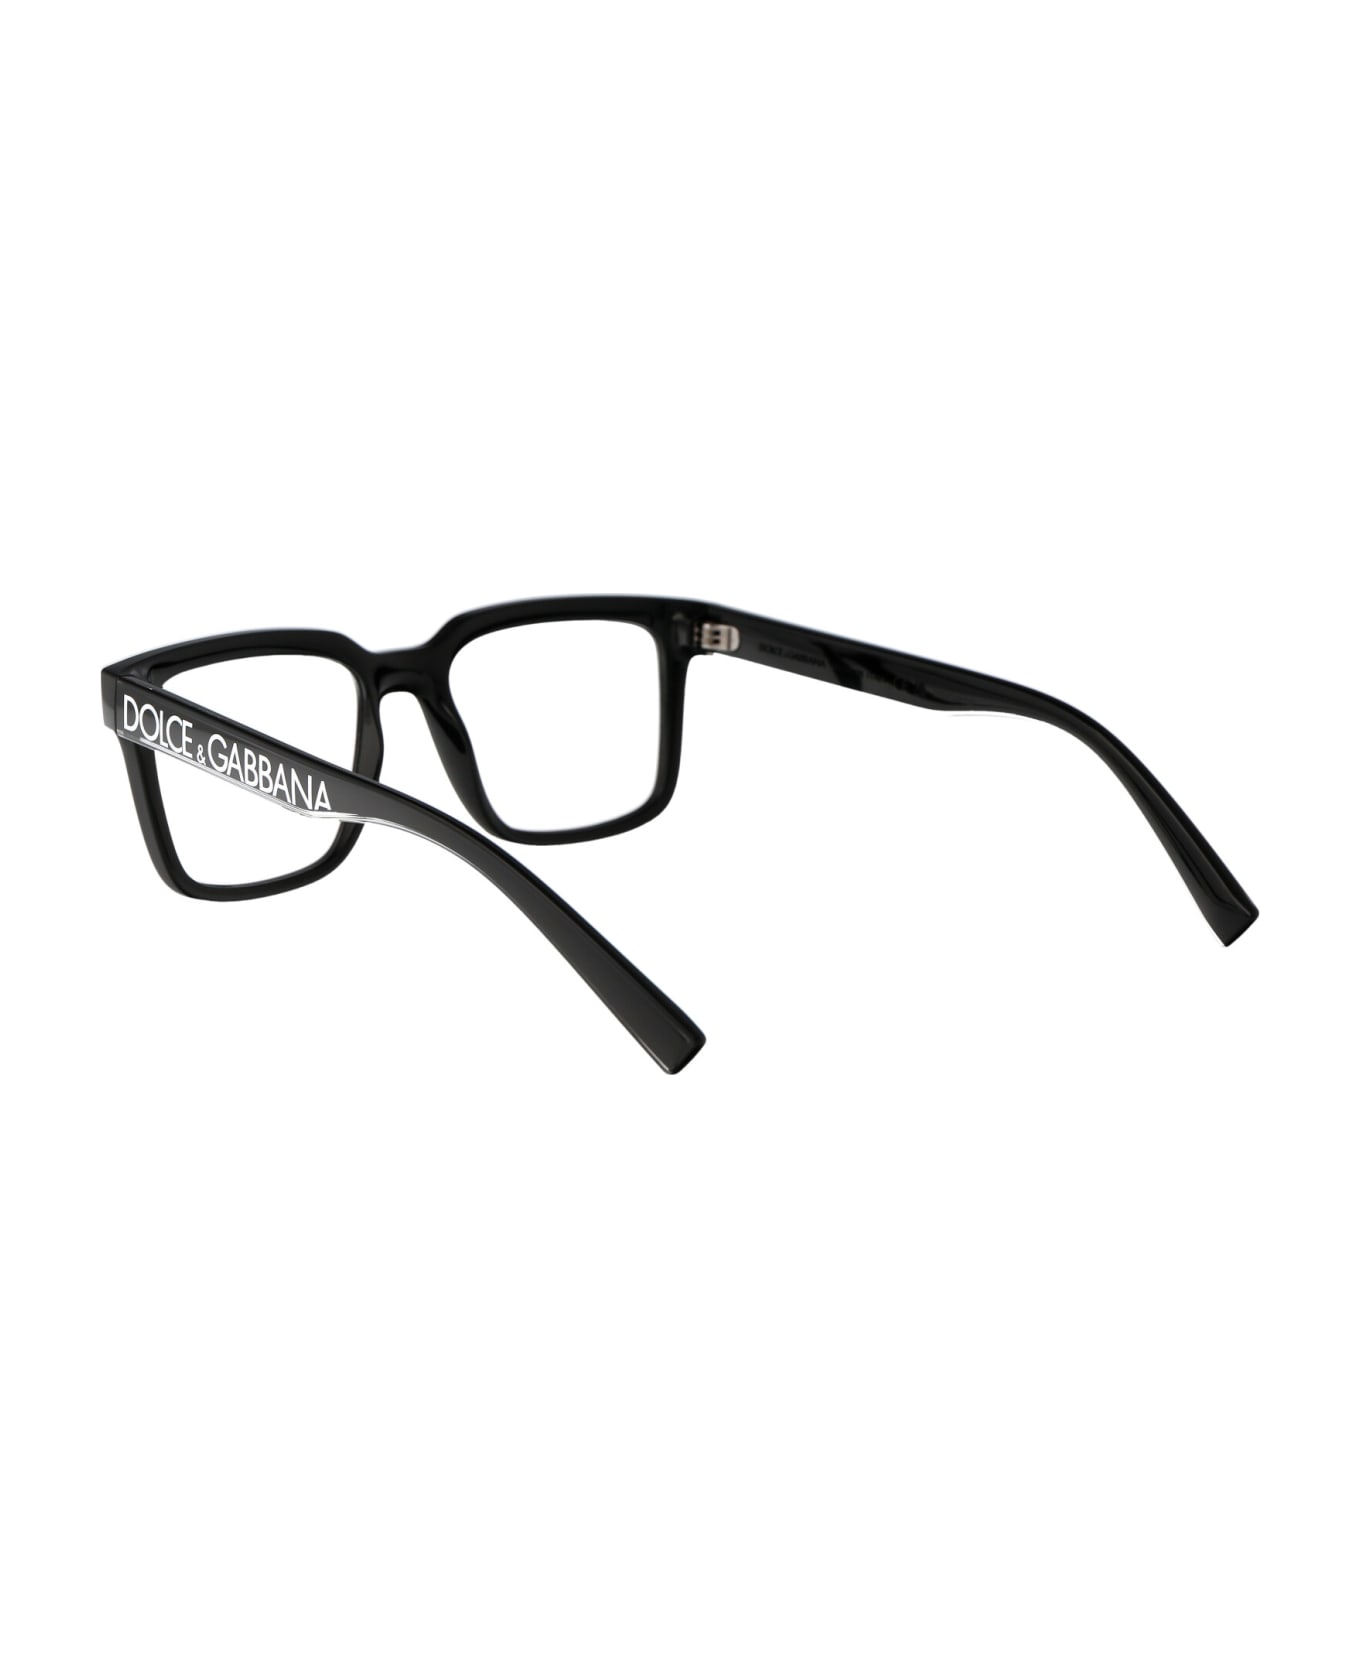 Dolce & Gabbana Eyewear 0dg5101 Glasses - 501 BLACK